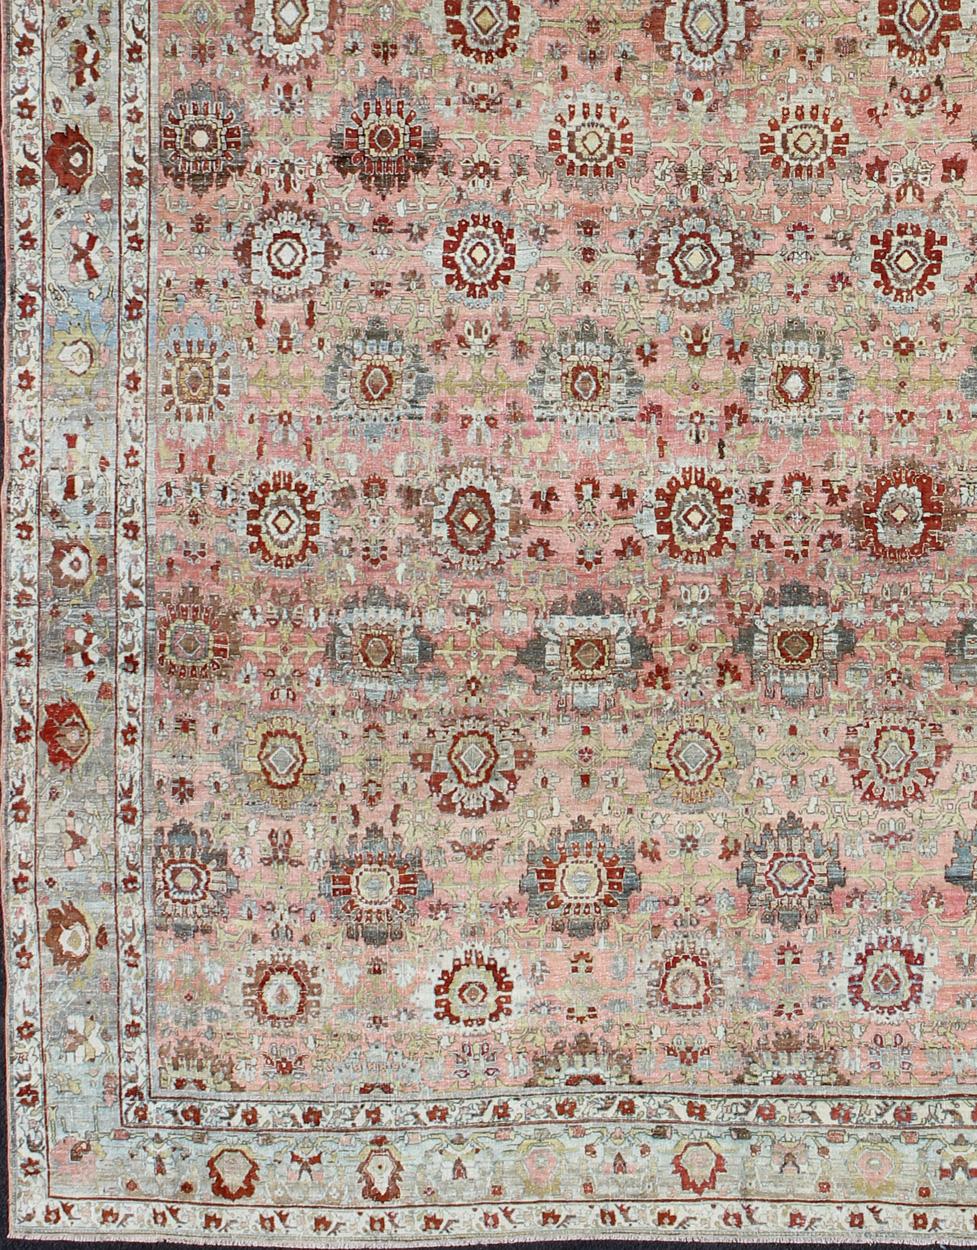 Remarkable antique Persian Bidjar rug with all-over design in light pink, light gray, light blue, green, steel blue. Kwarugs / J10-0805. Antique Pink Rug Bidjar.

Measures: 12'4 x 17'11.

This magnificent Bidjar with an exquisite, all-over pattern